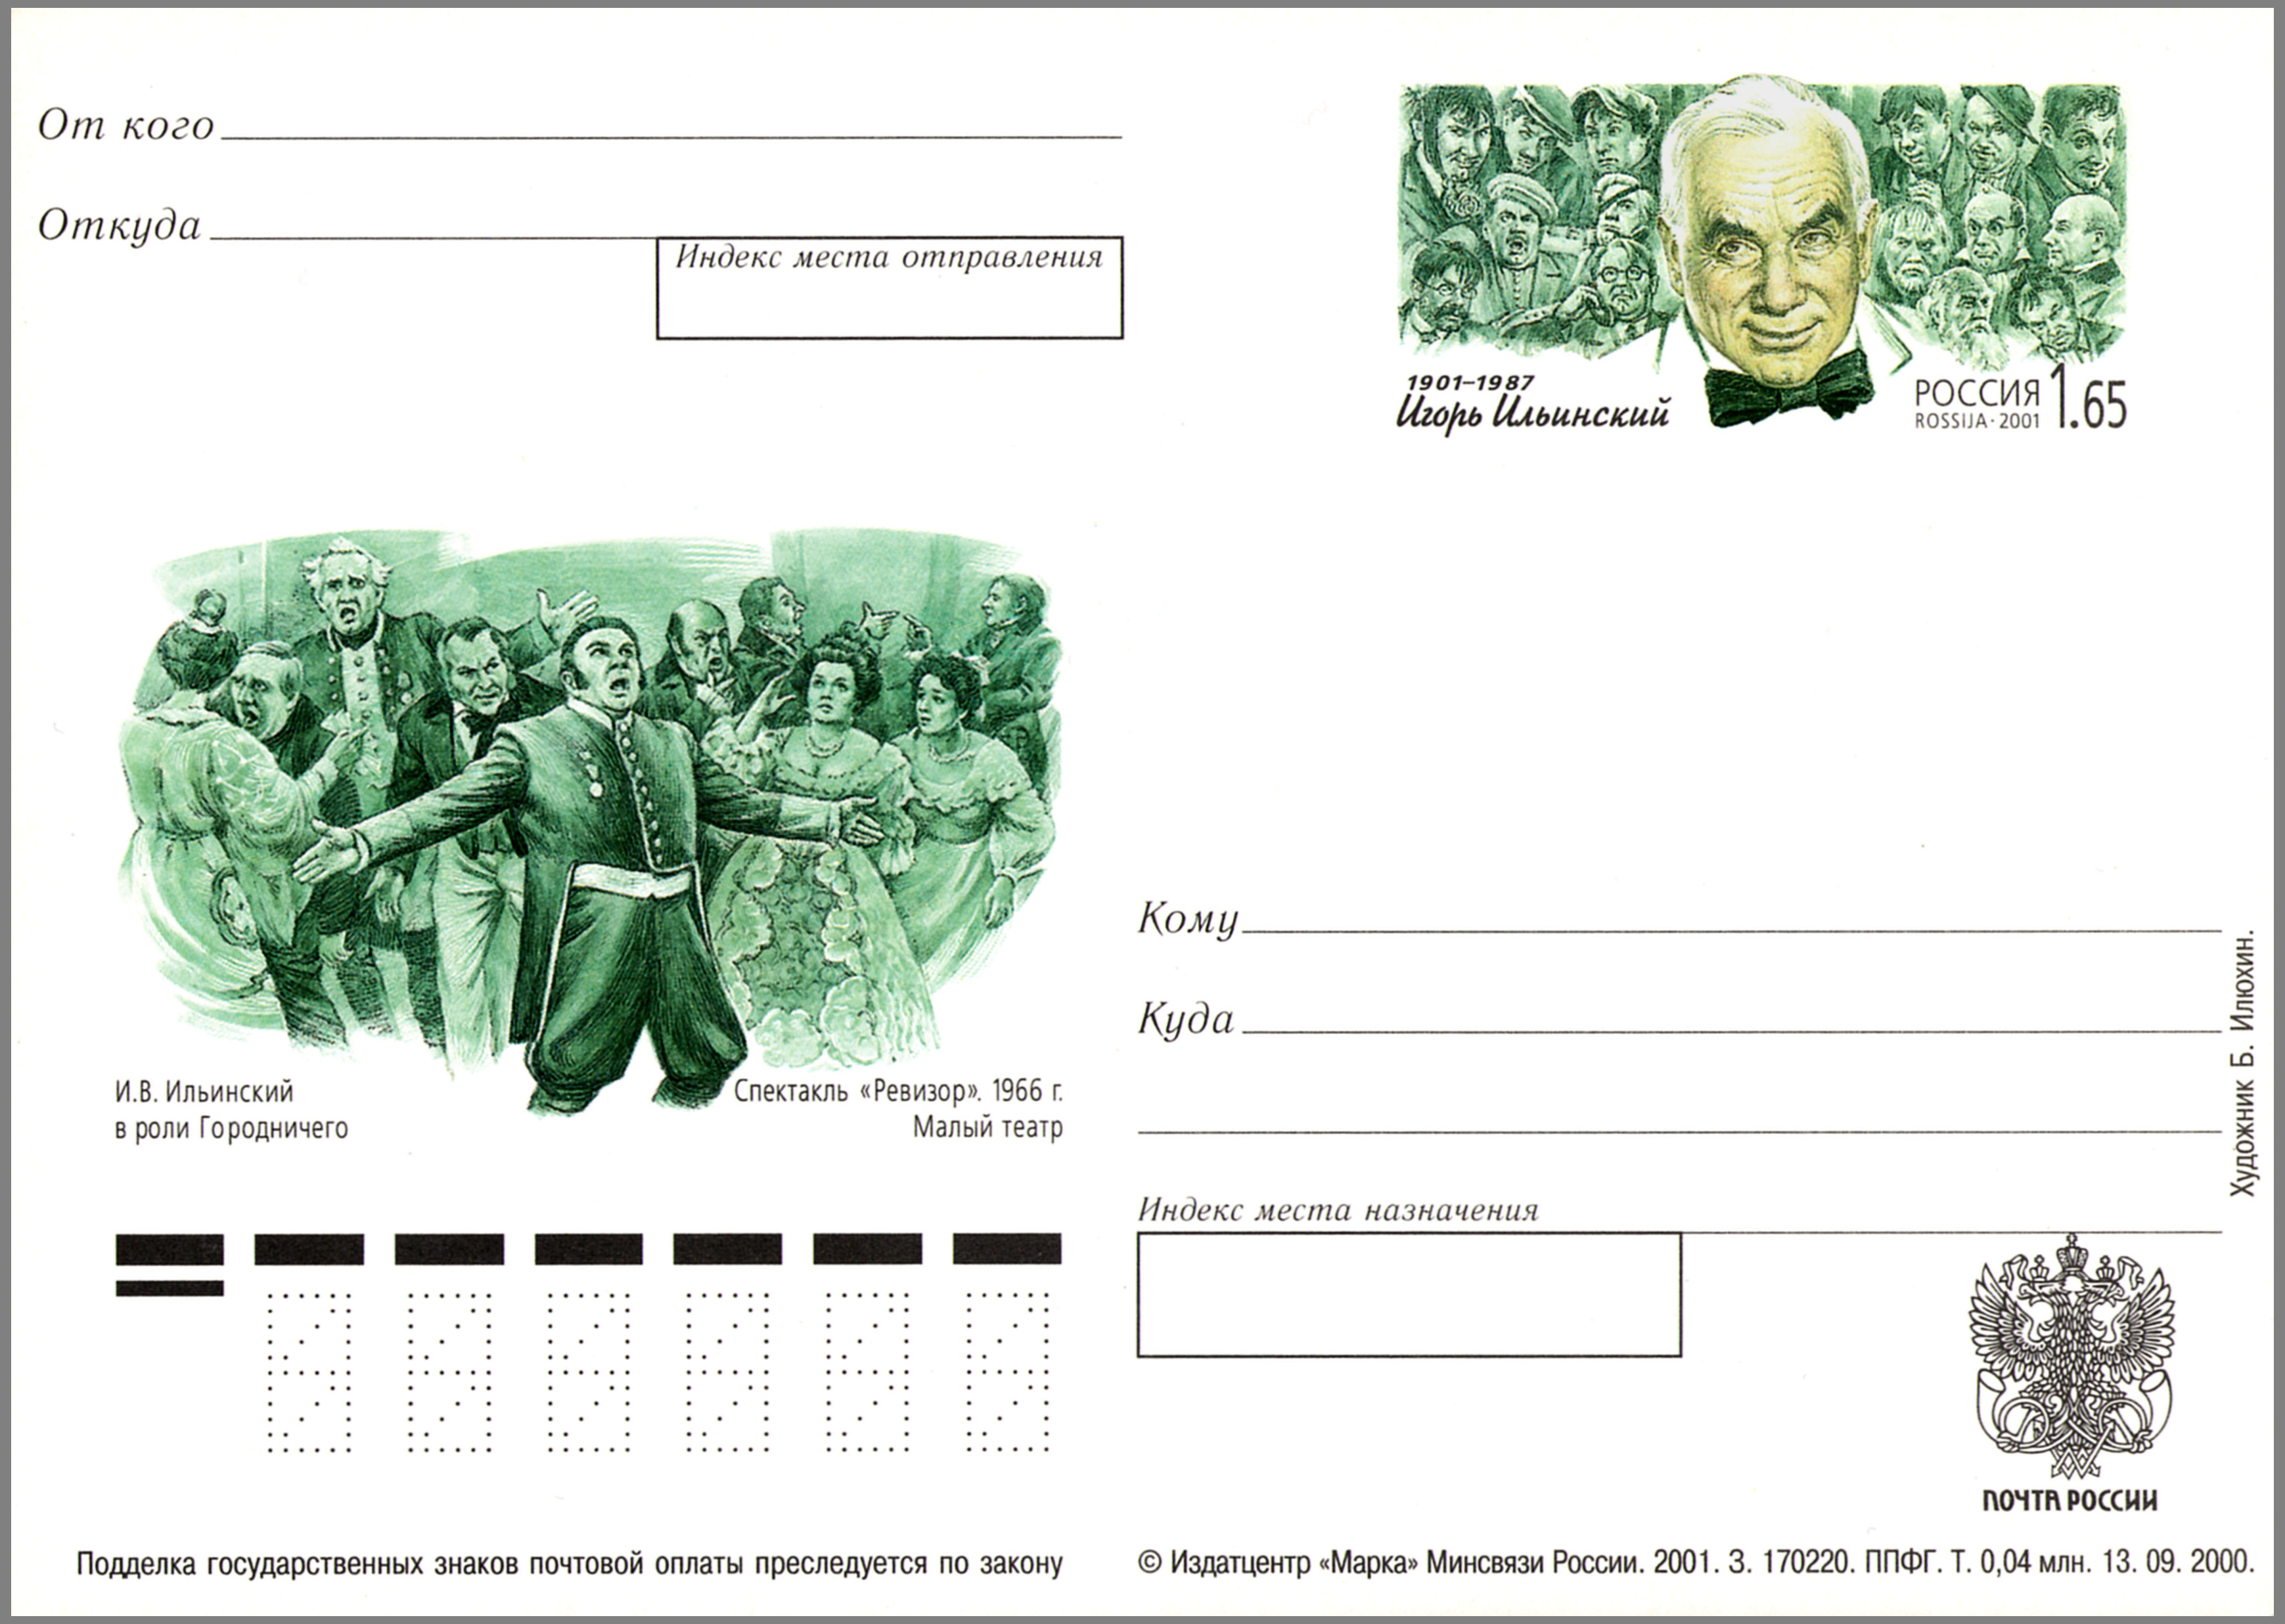 Igor Ilyinsky Postal card Russia 2001